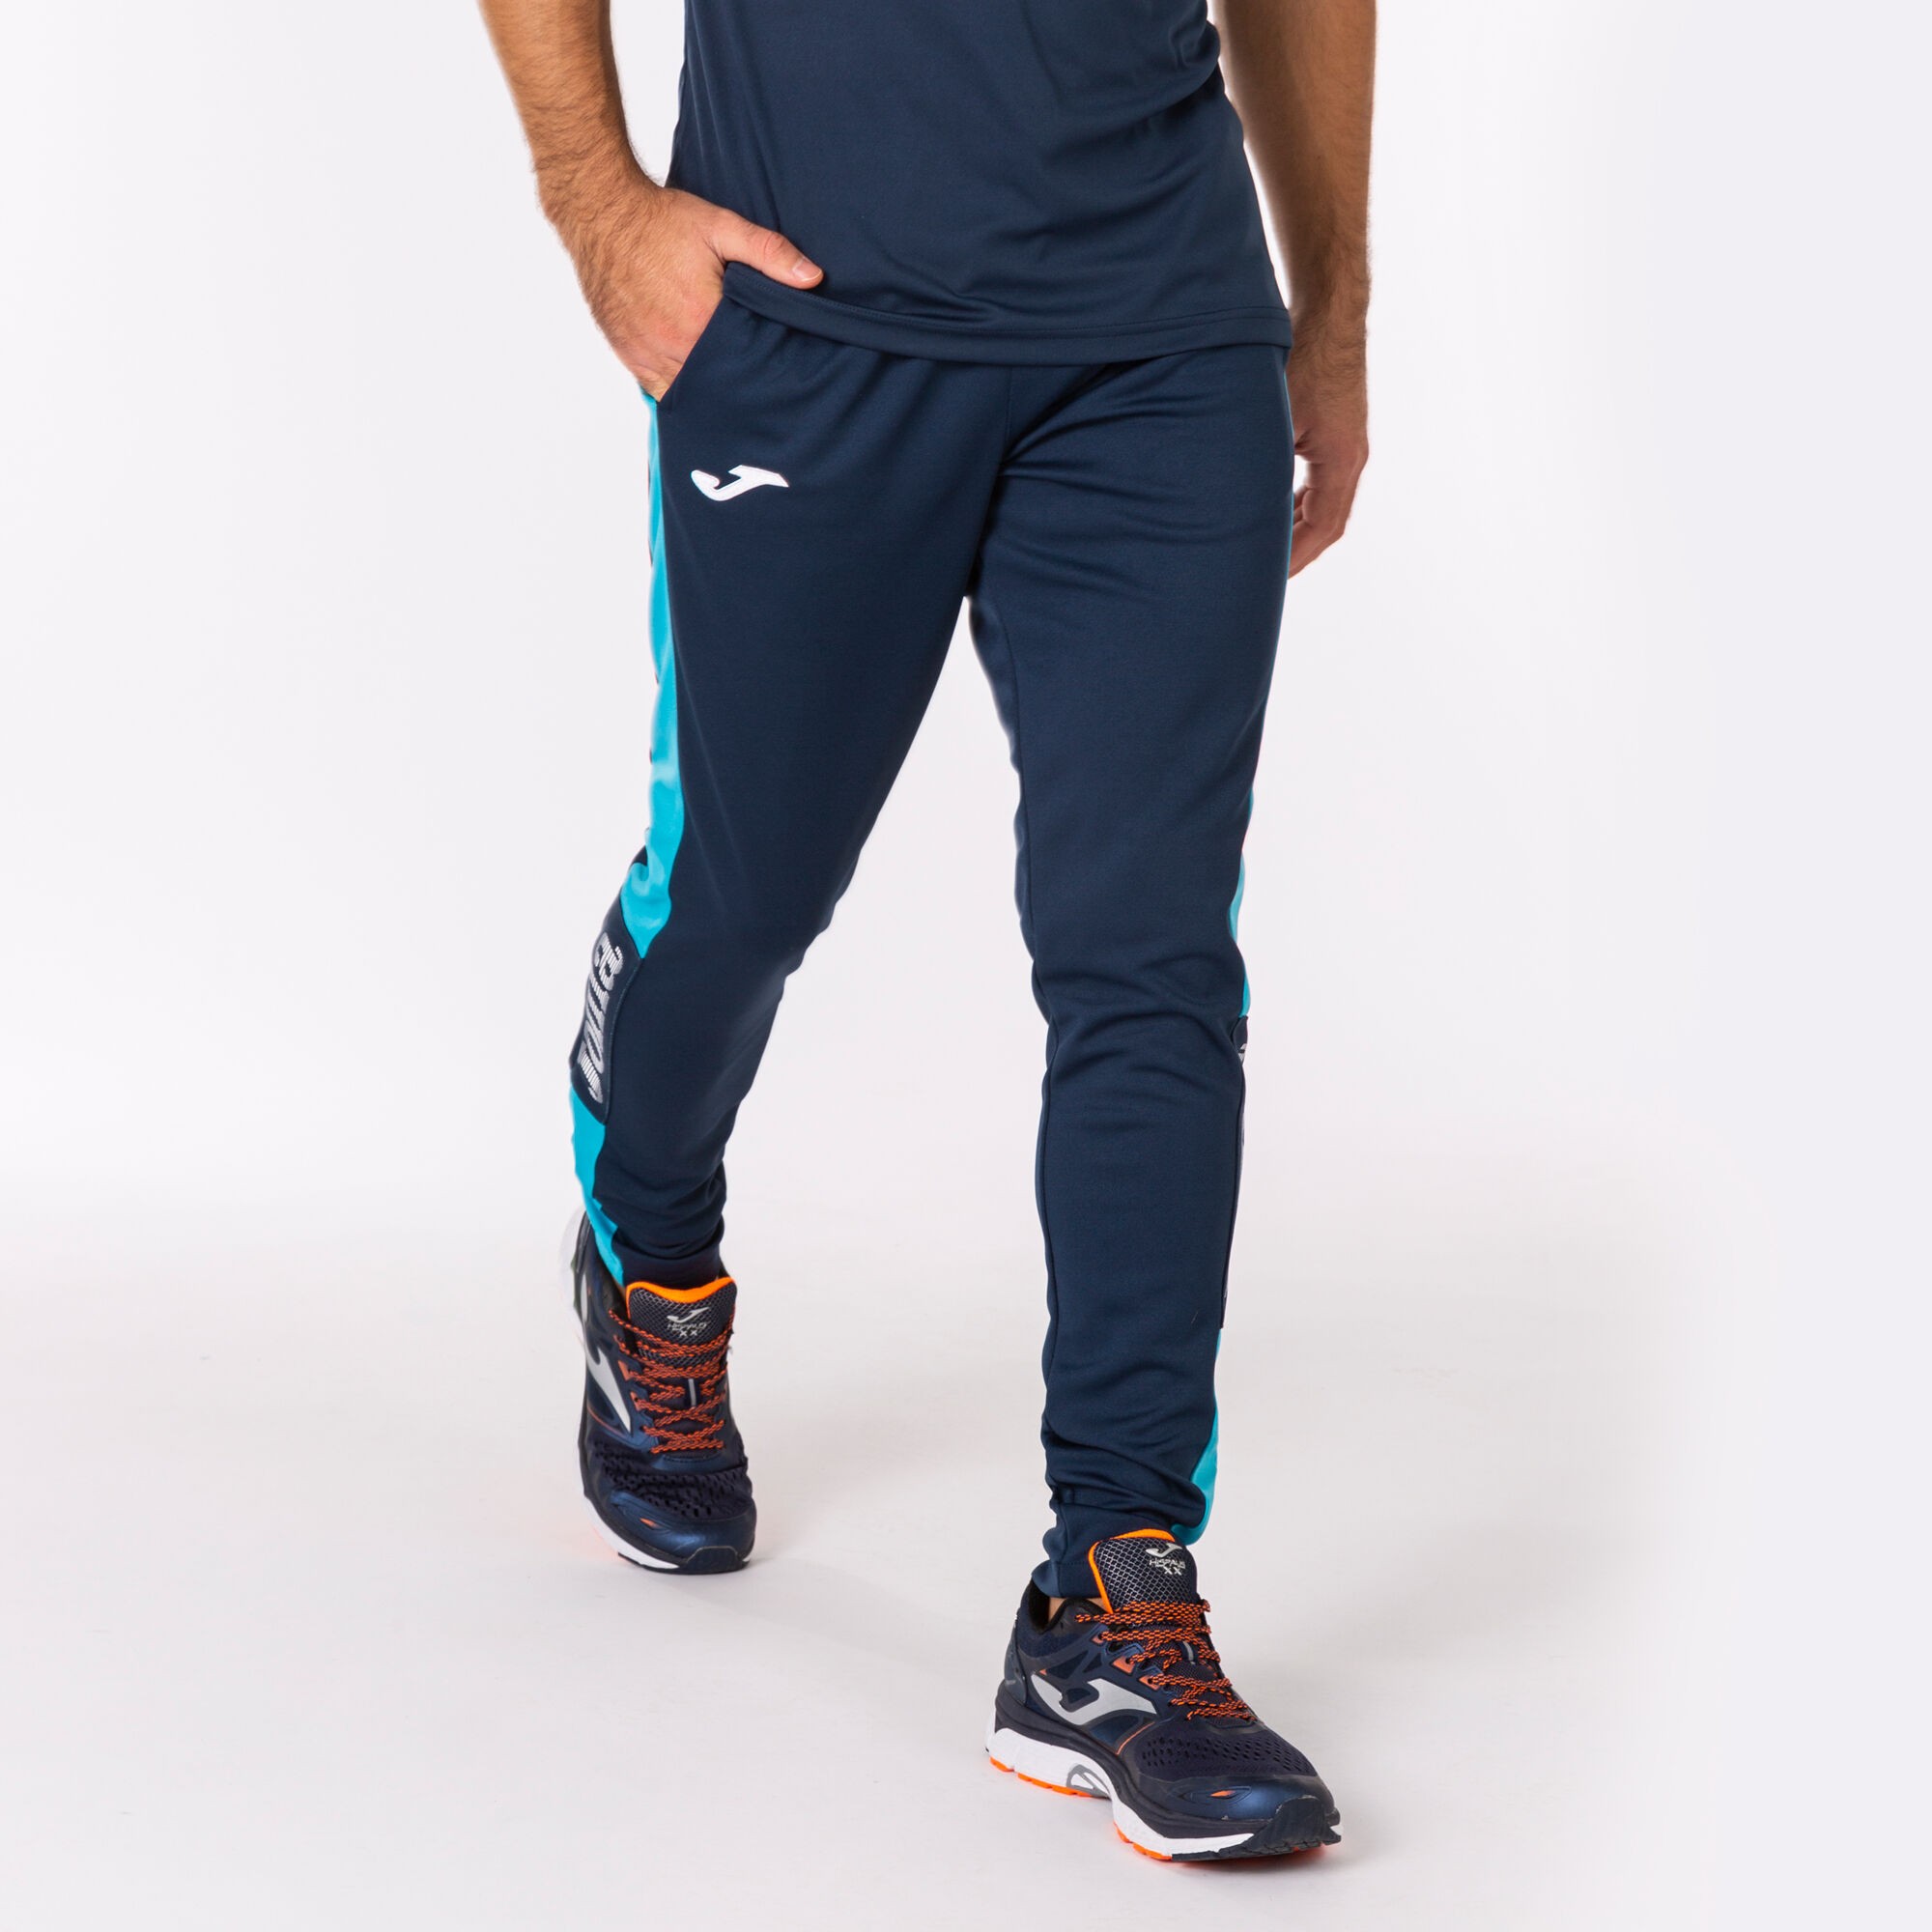 Longs pants man Championship IV navy blue fluorescent turquoise